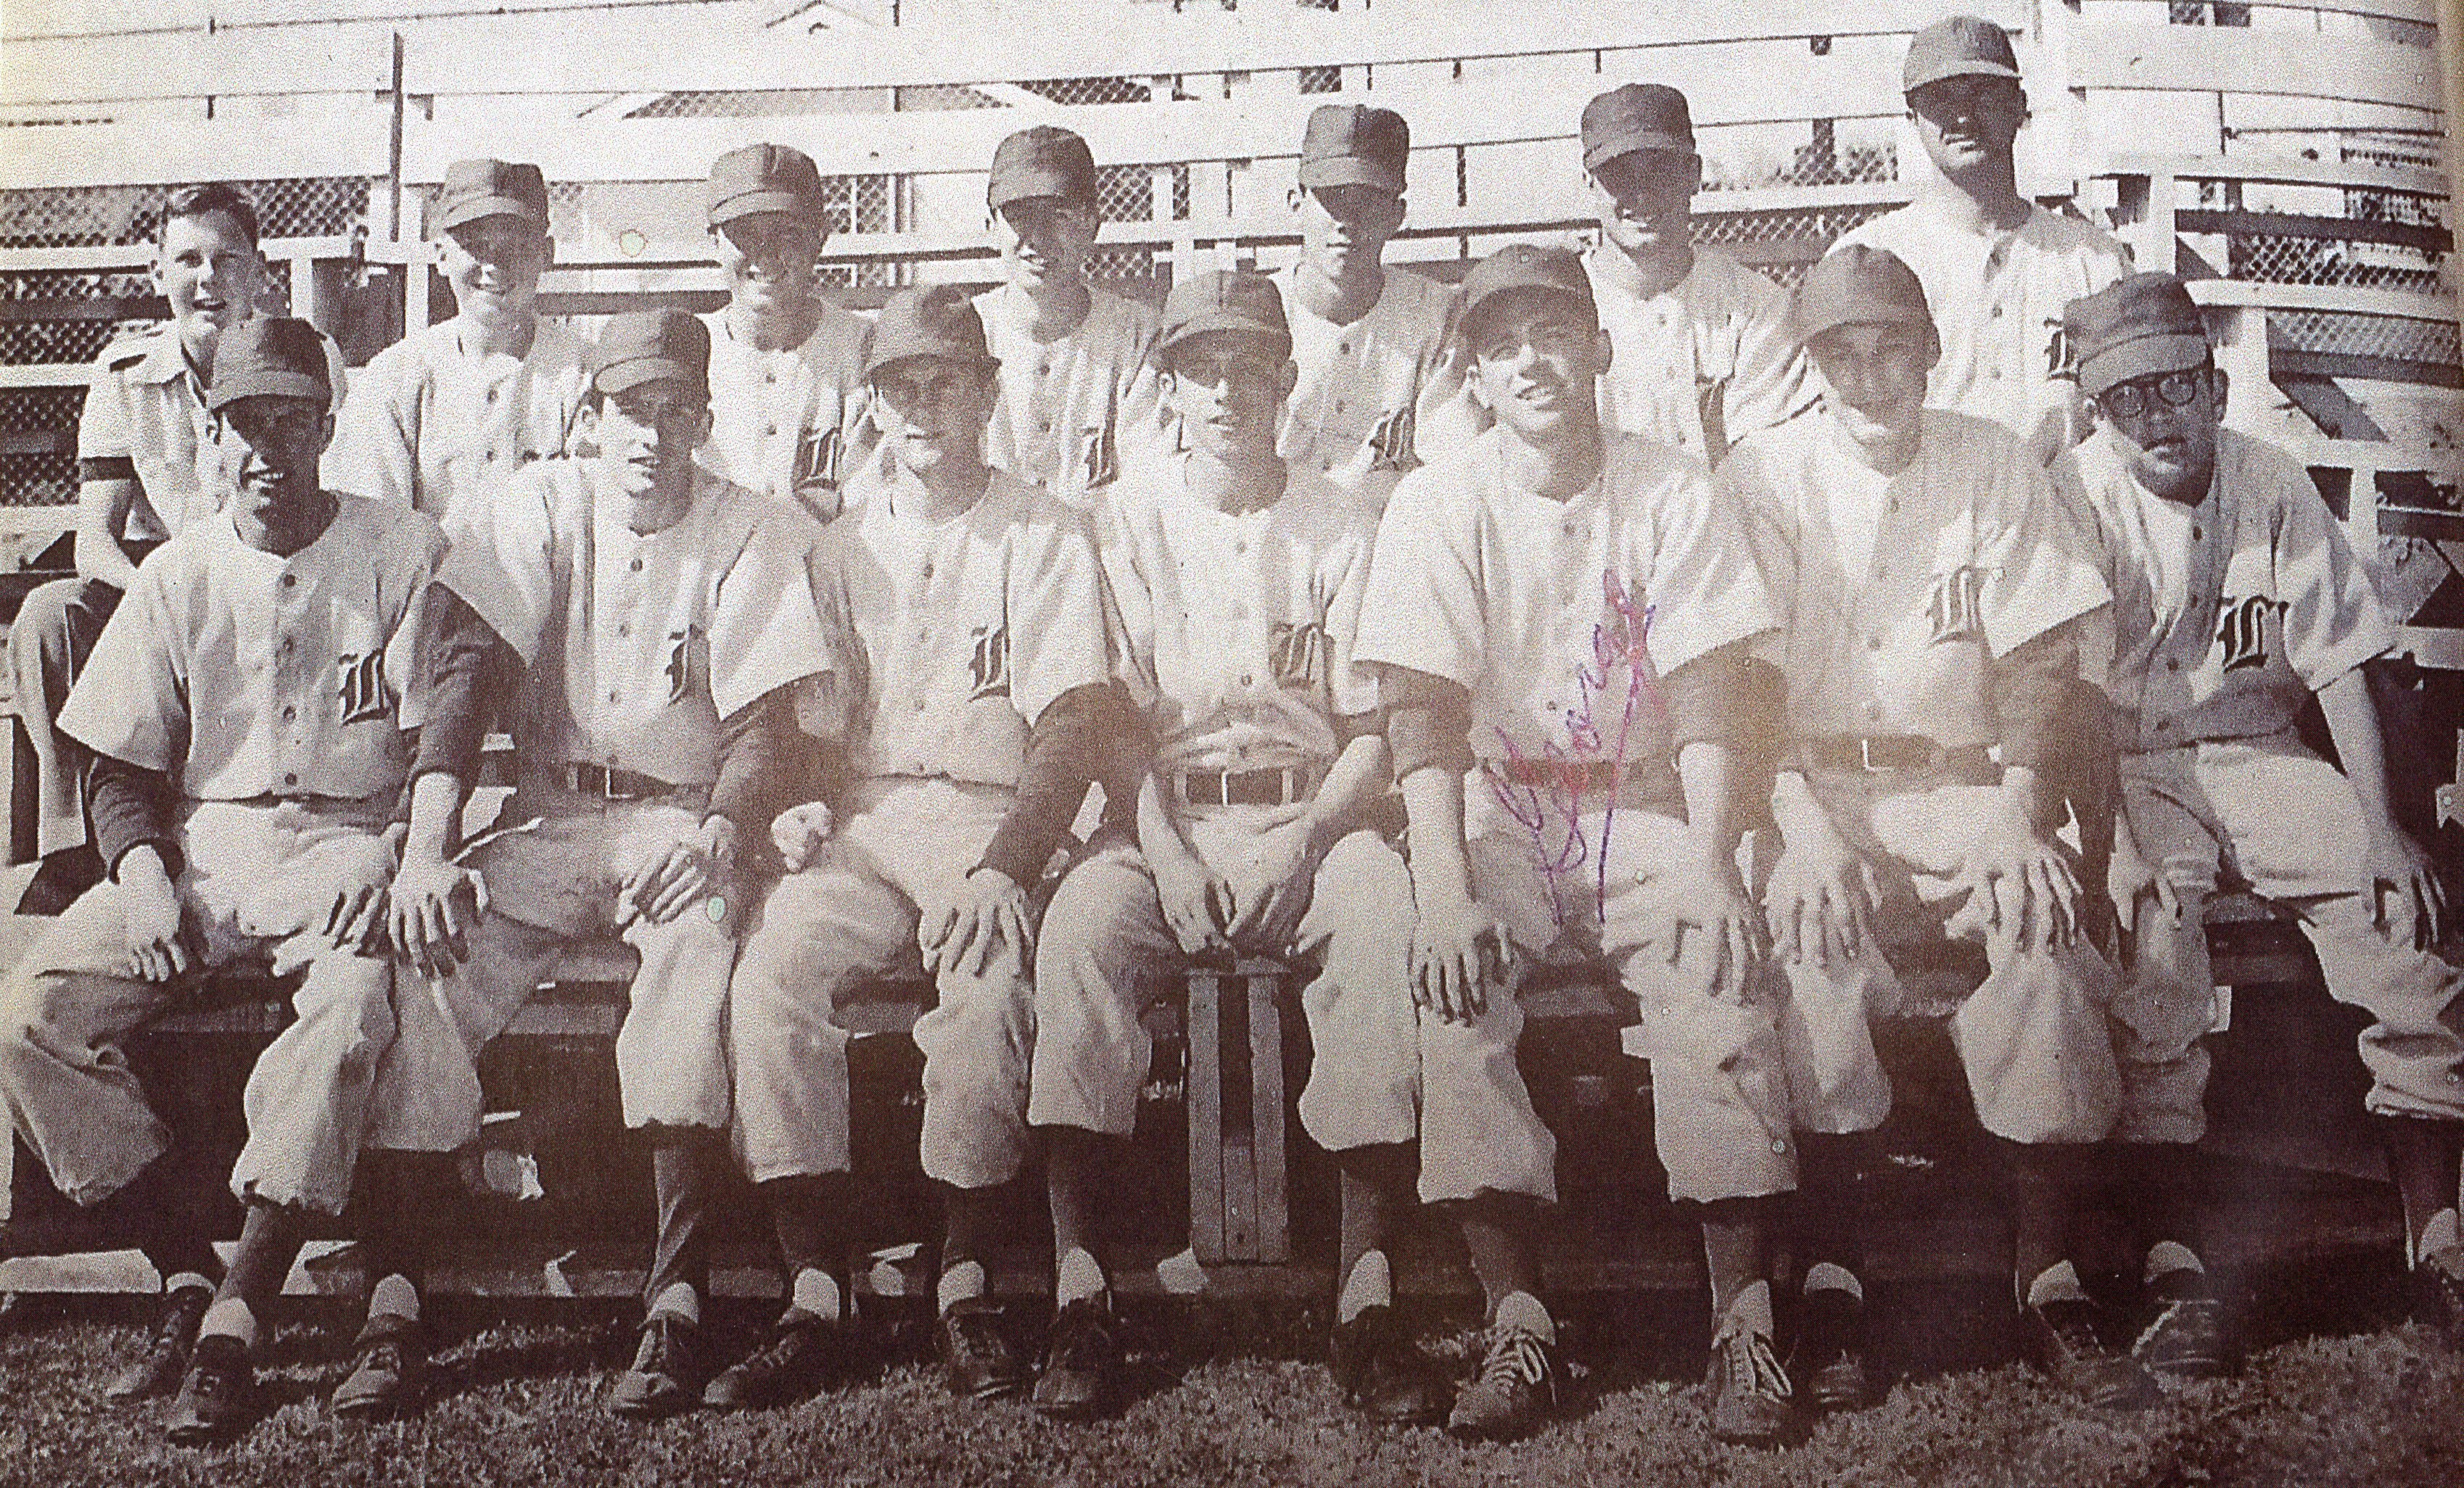 Sanclemente (upper right) was head coach at La Jolla in 1956.